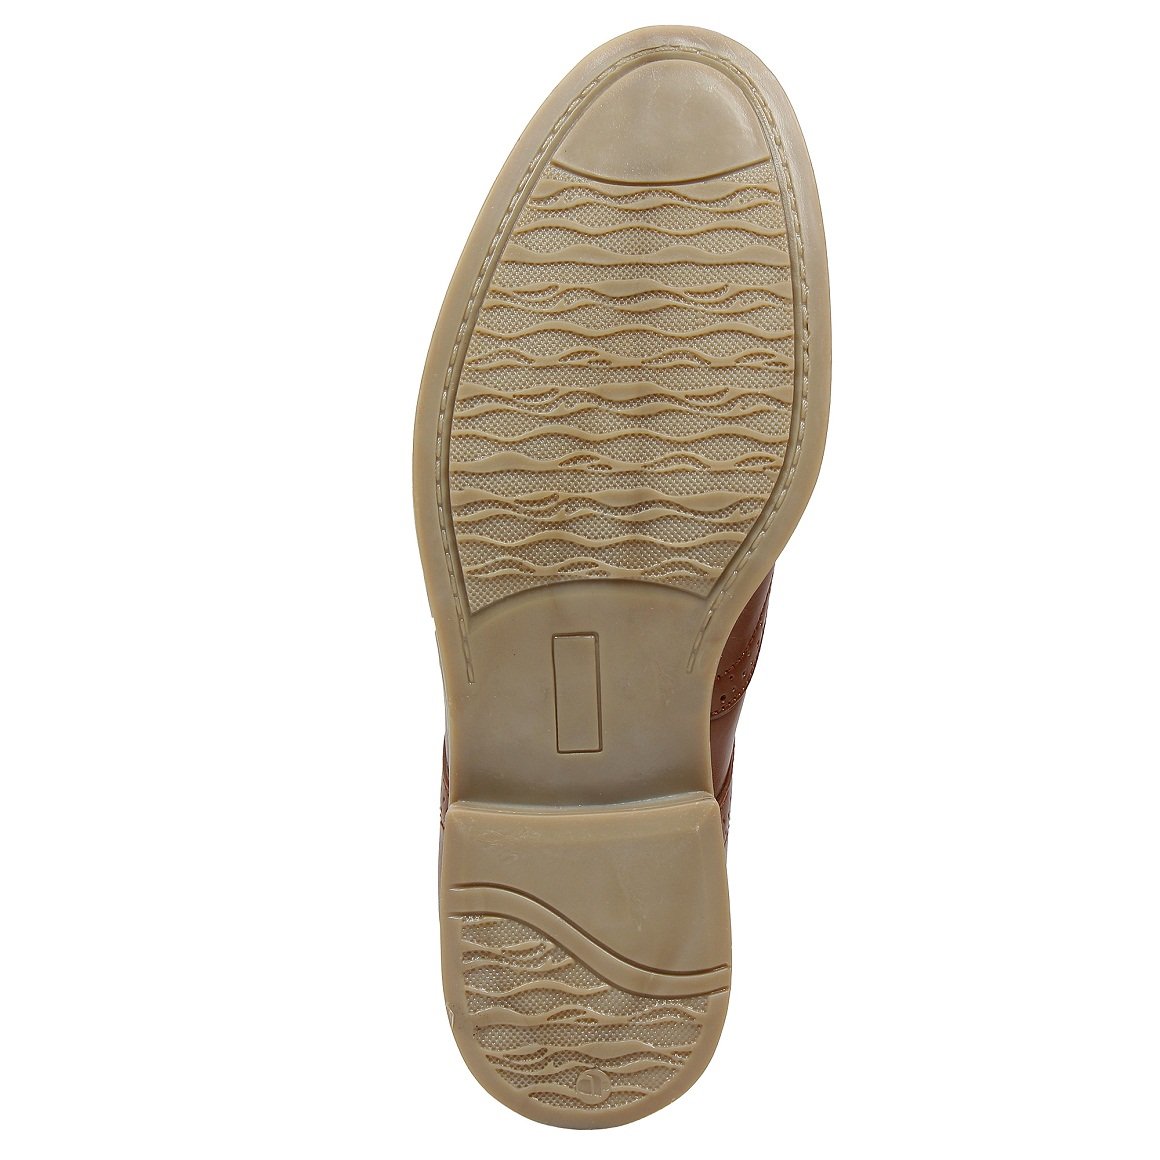 SeeandWear Tan Best Brogue Shoes For Men - SeeandWear